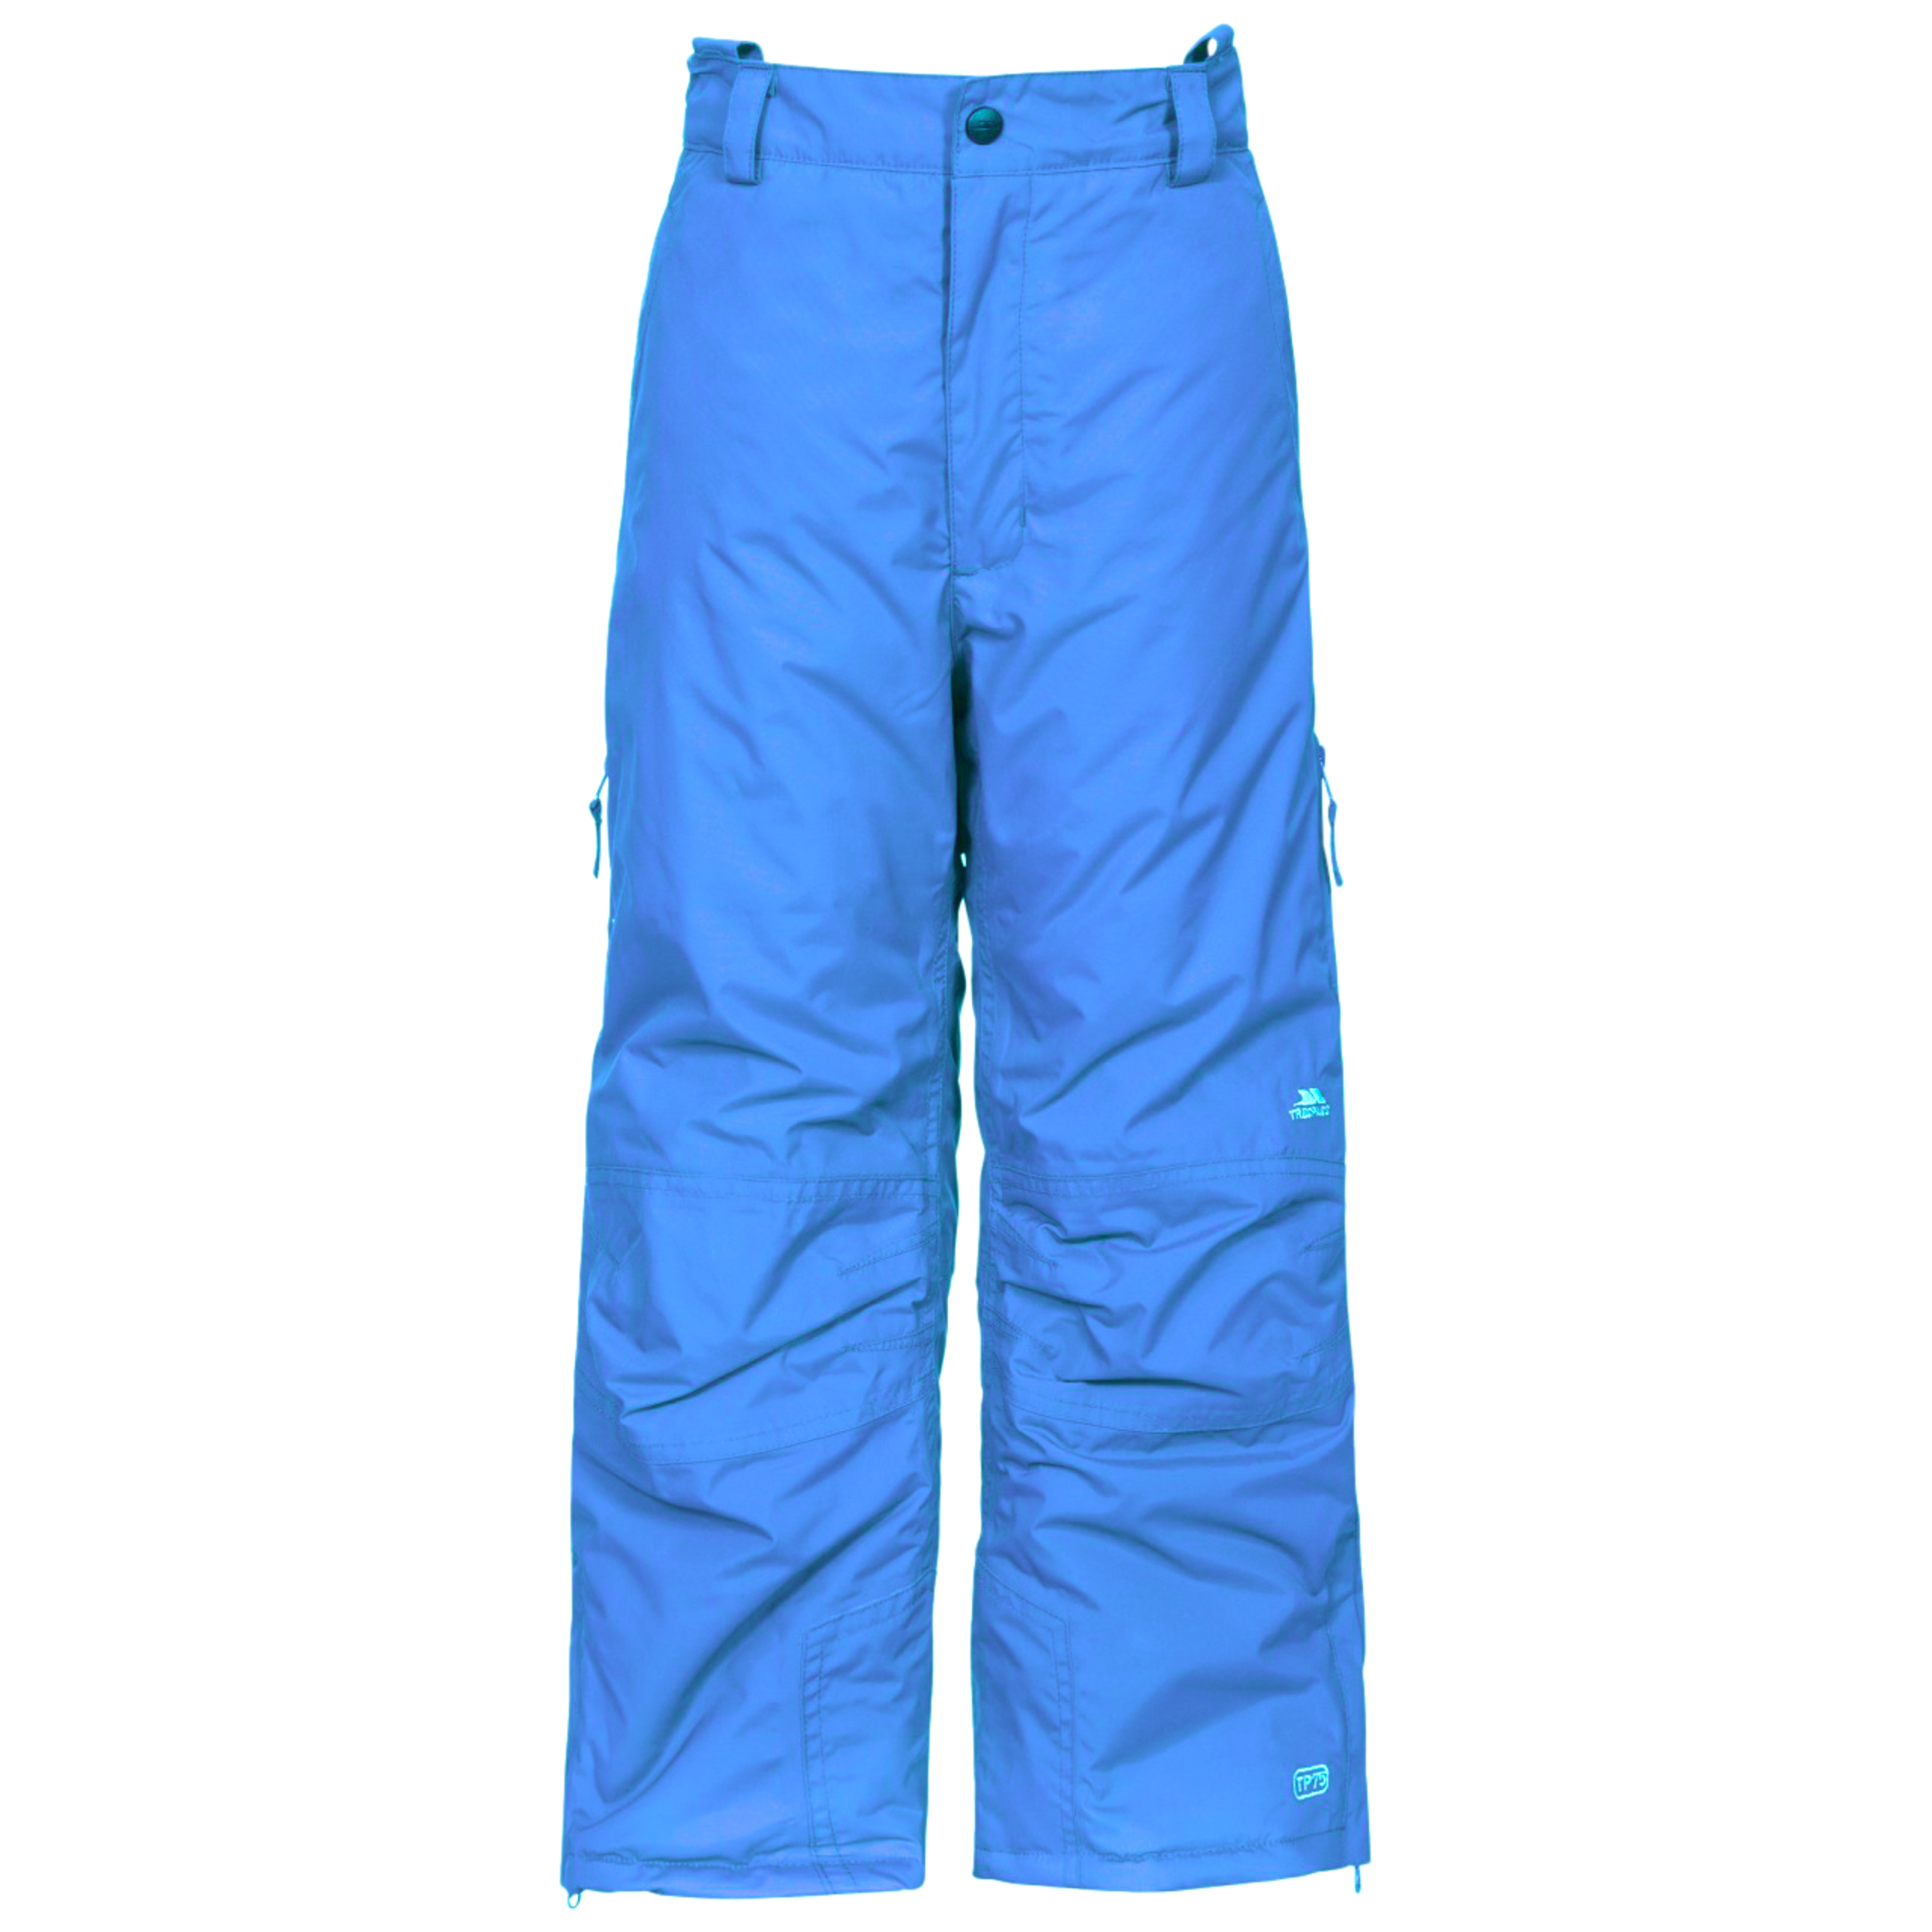 Kids Unisex Contamines Padded Ski Pants Trespass (Azul)